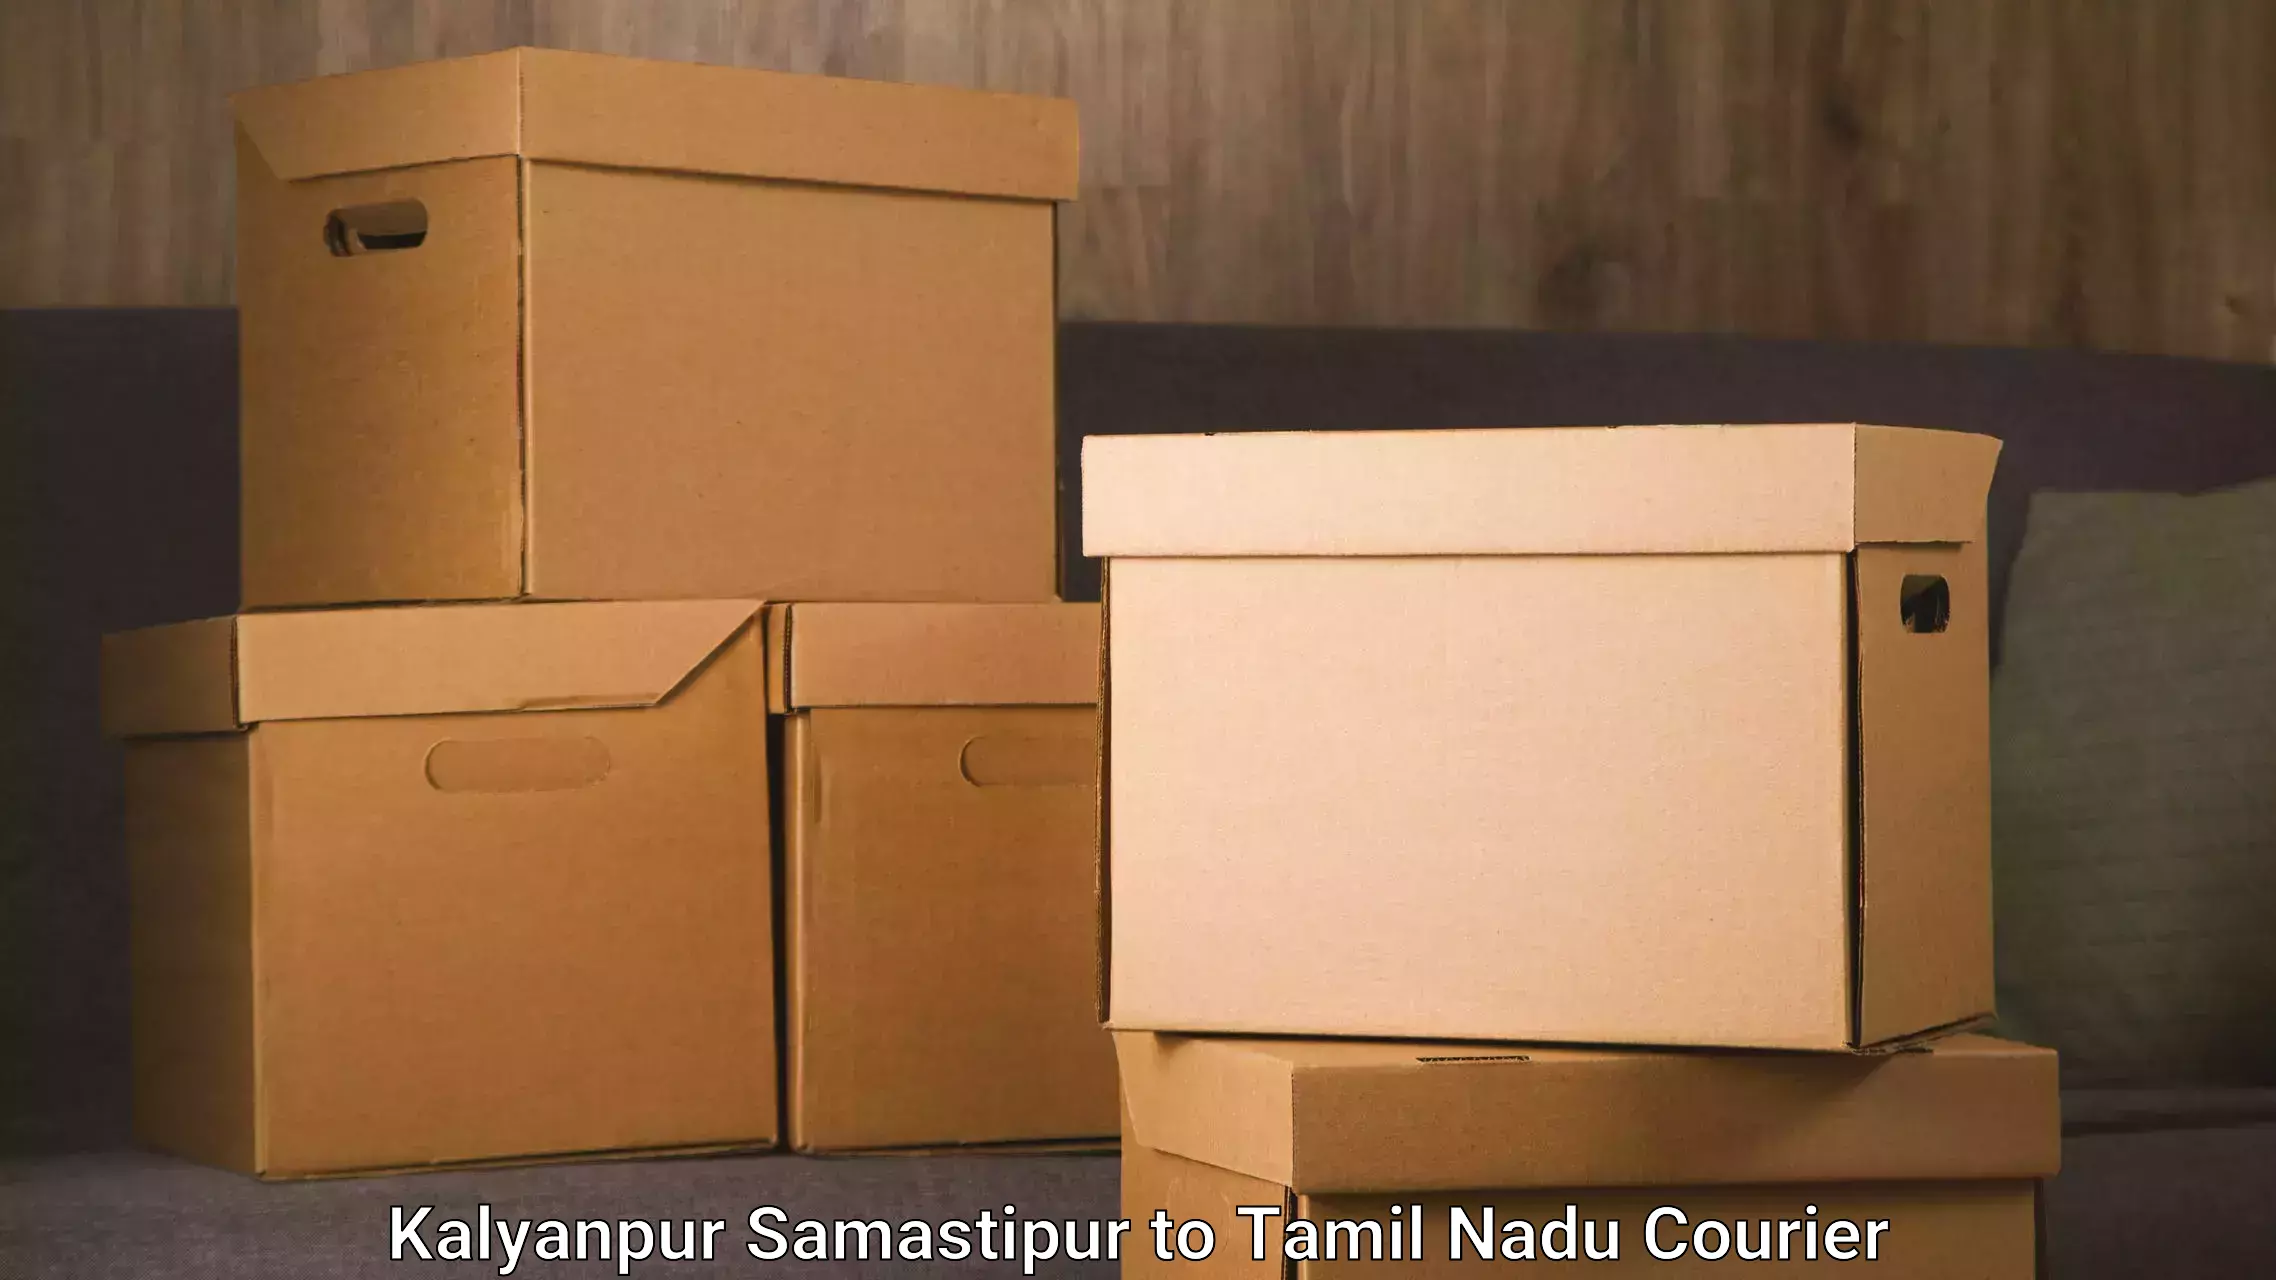 Efficient moving company Kalyanpur Samastipur to Batlagundu